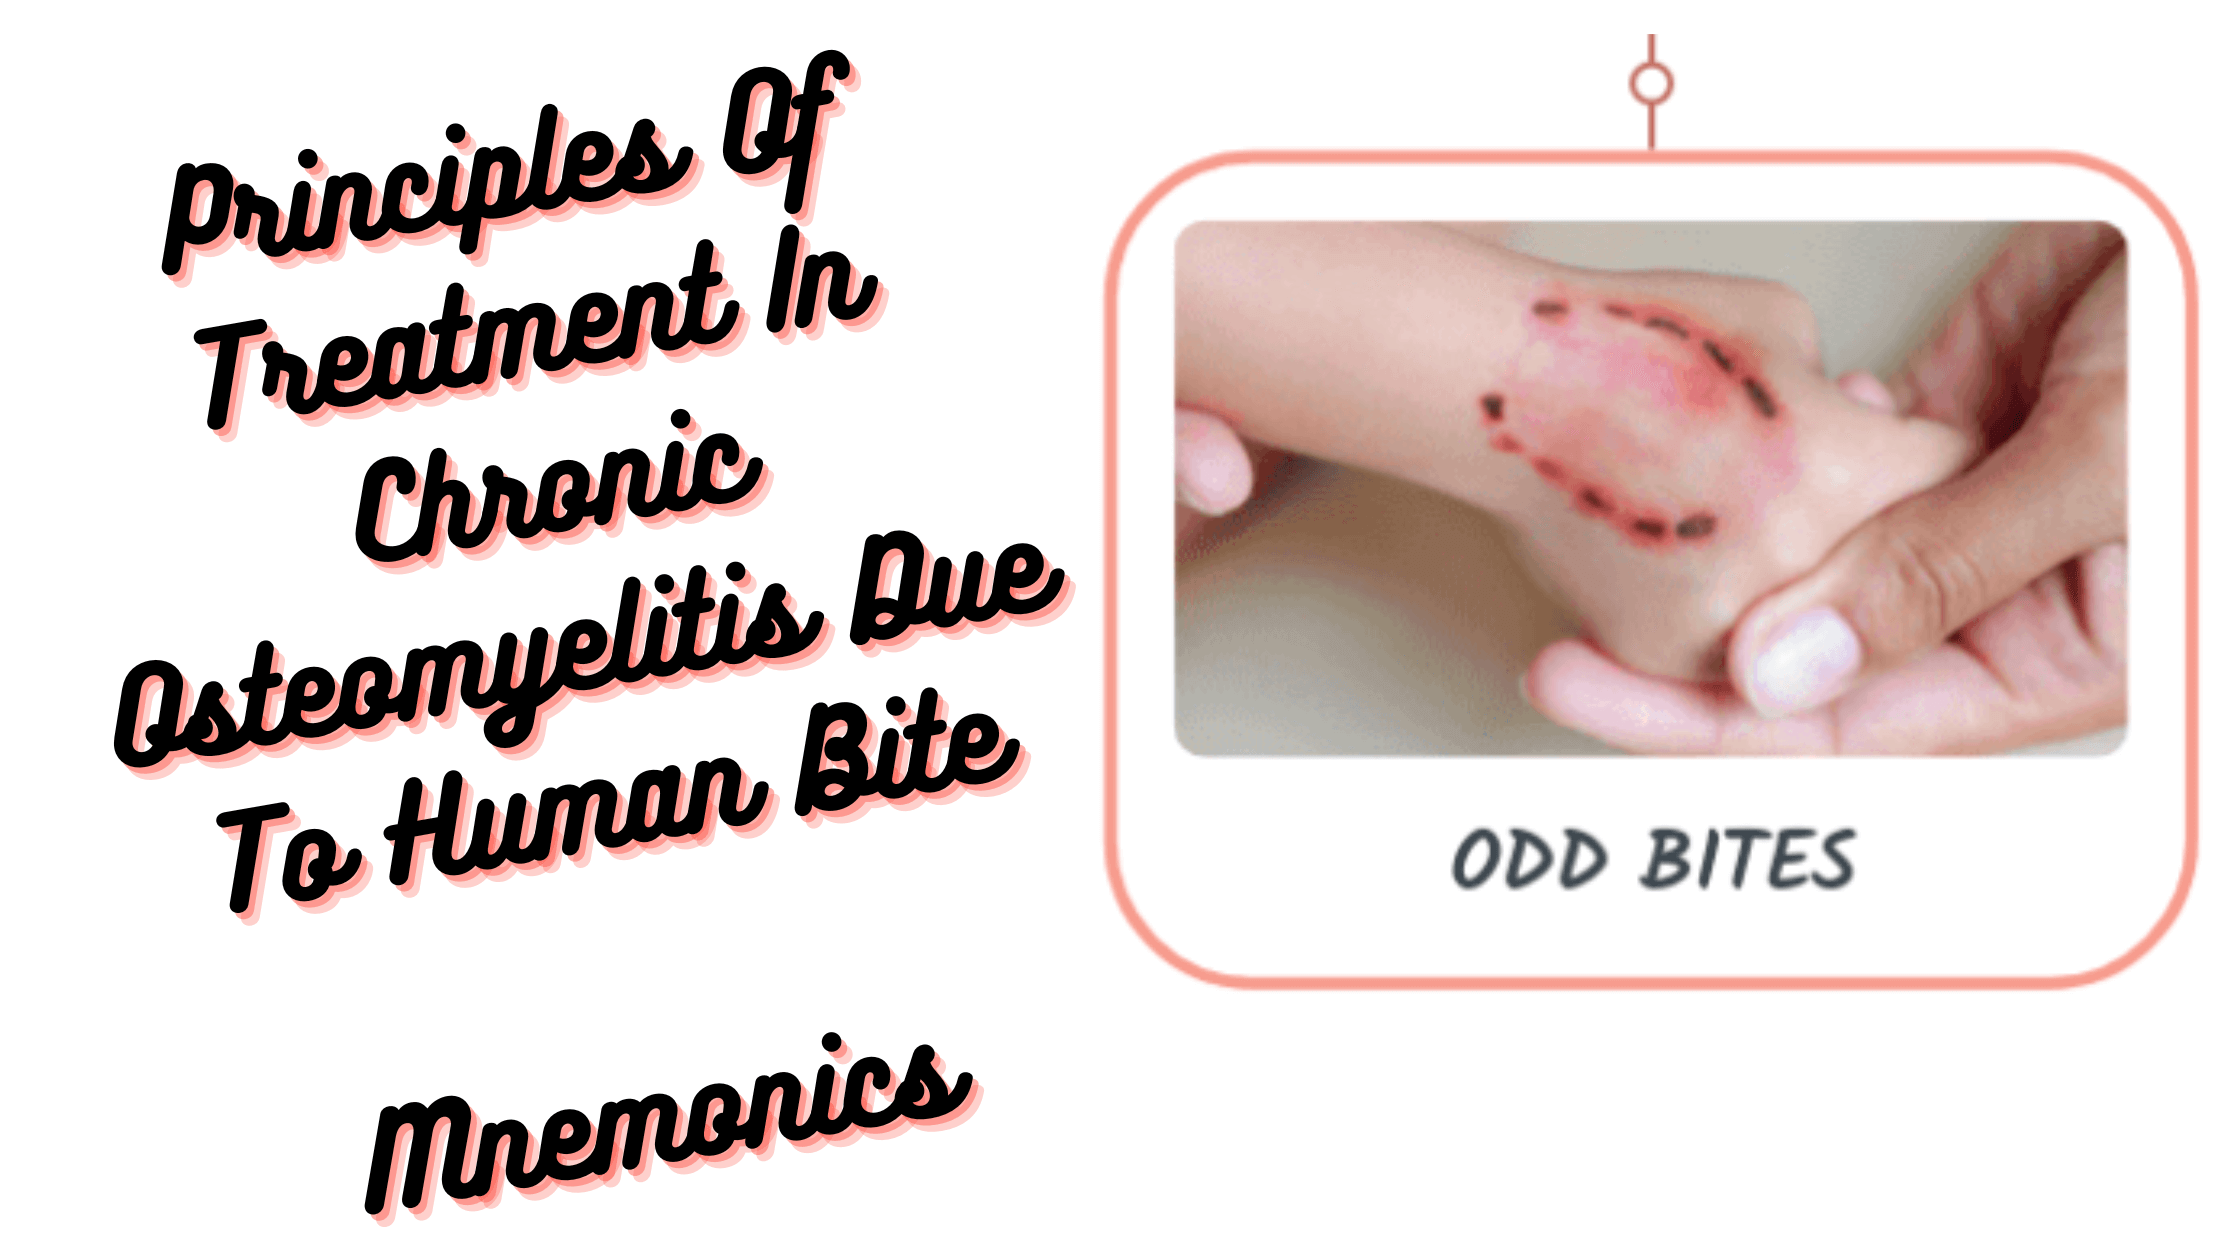 Chronic Osteomyelitis Treatment Secondary to Human Bite Mnemonics